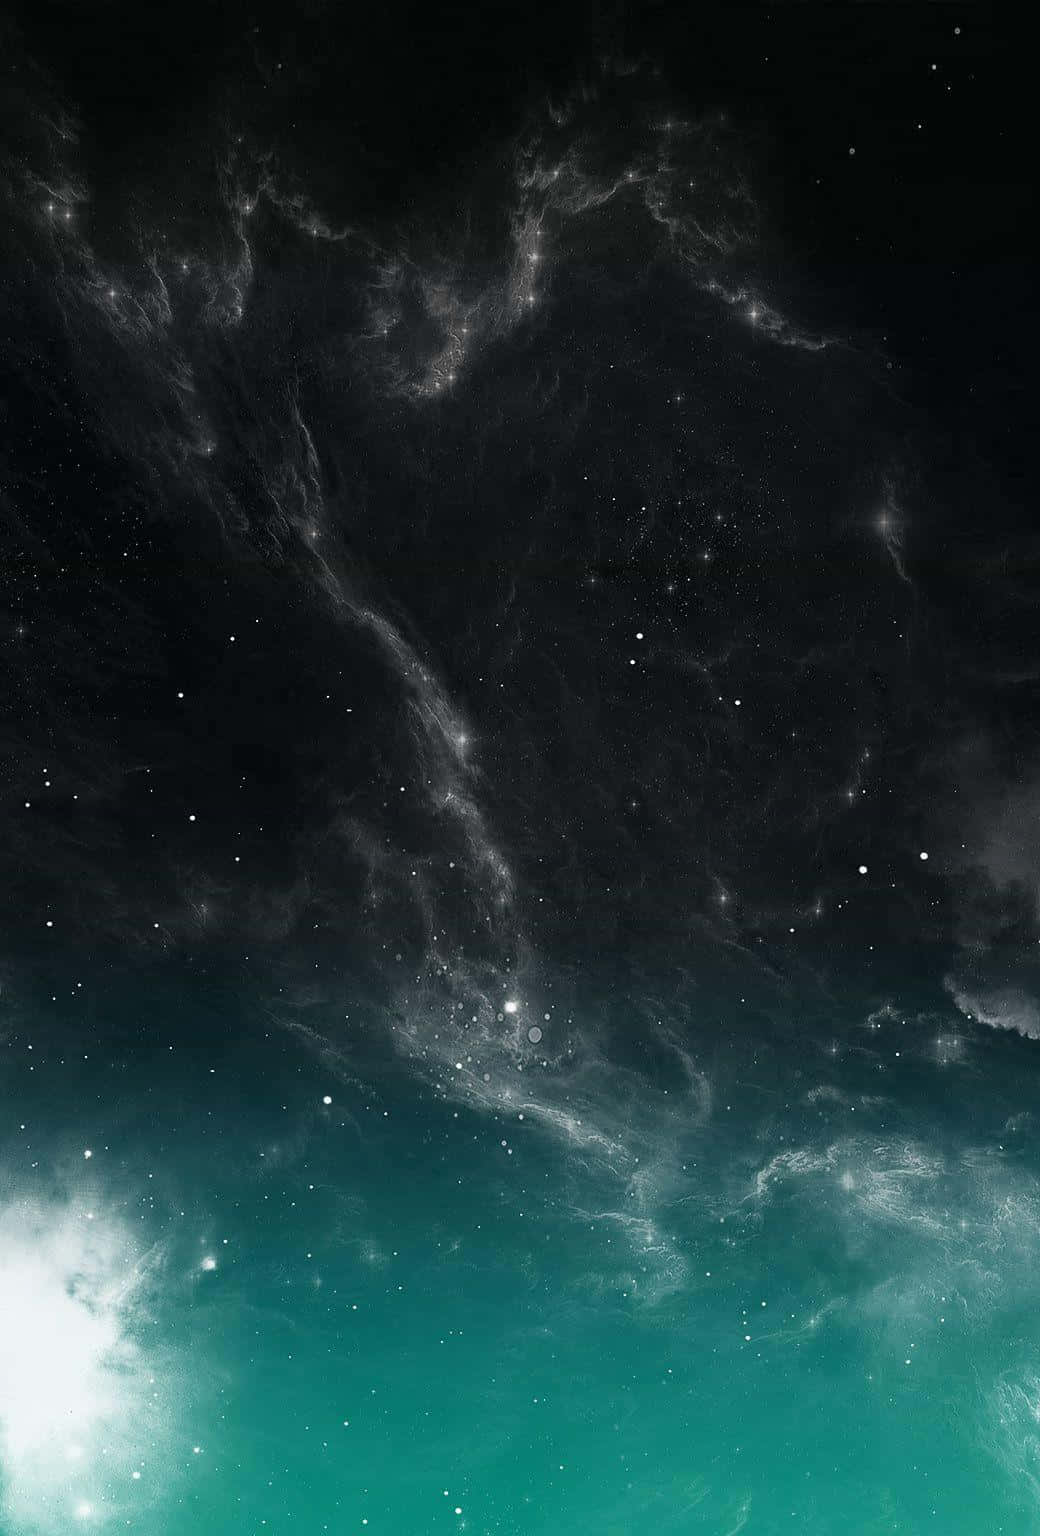 Ursprunglig Iphone 5s Teal Galaxy Wallpaper